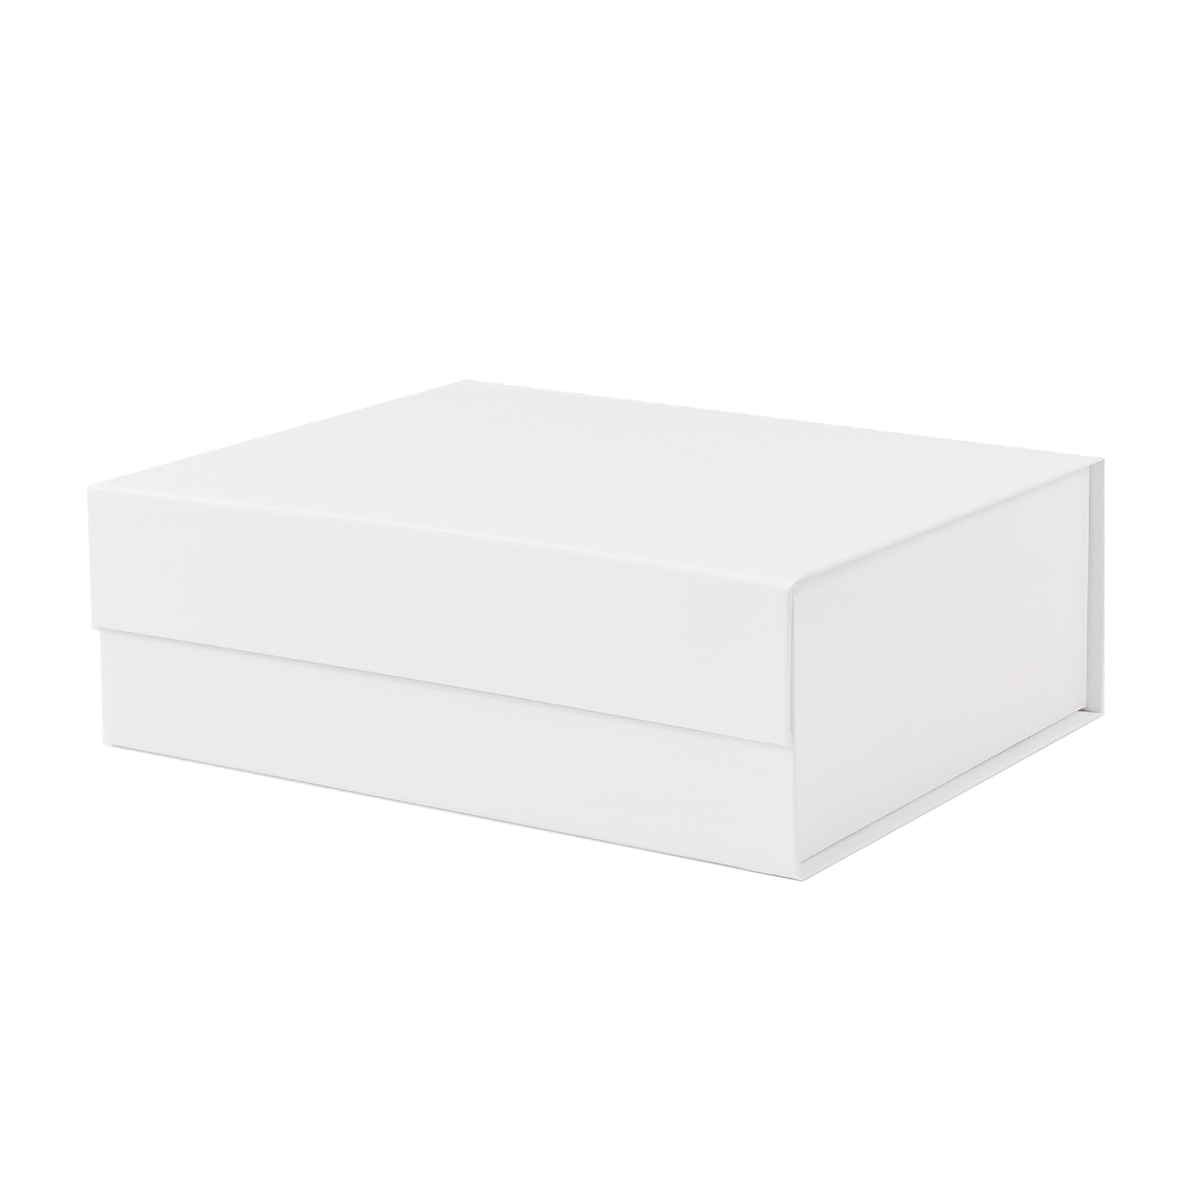 White Medium Rectangle Magnetic Gift Boxes